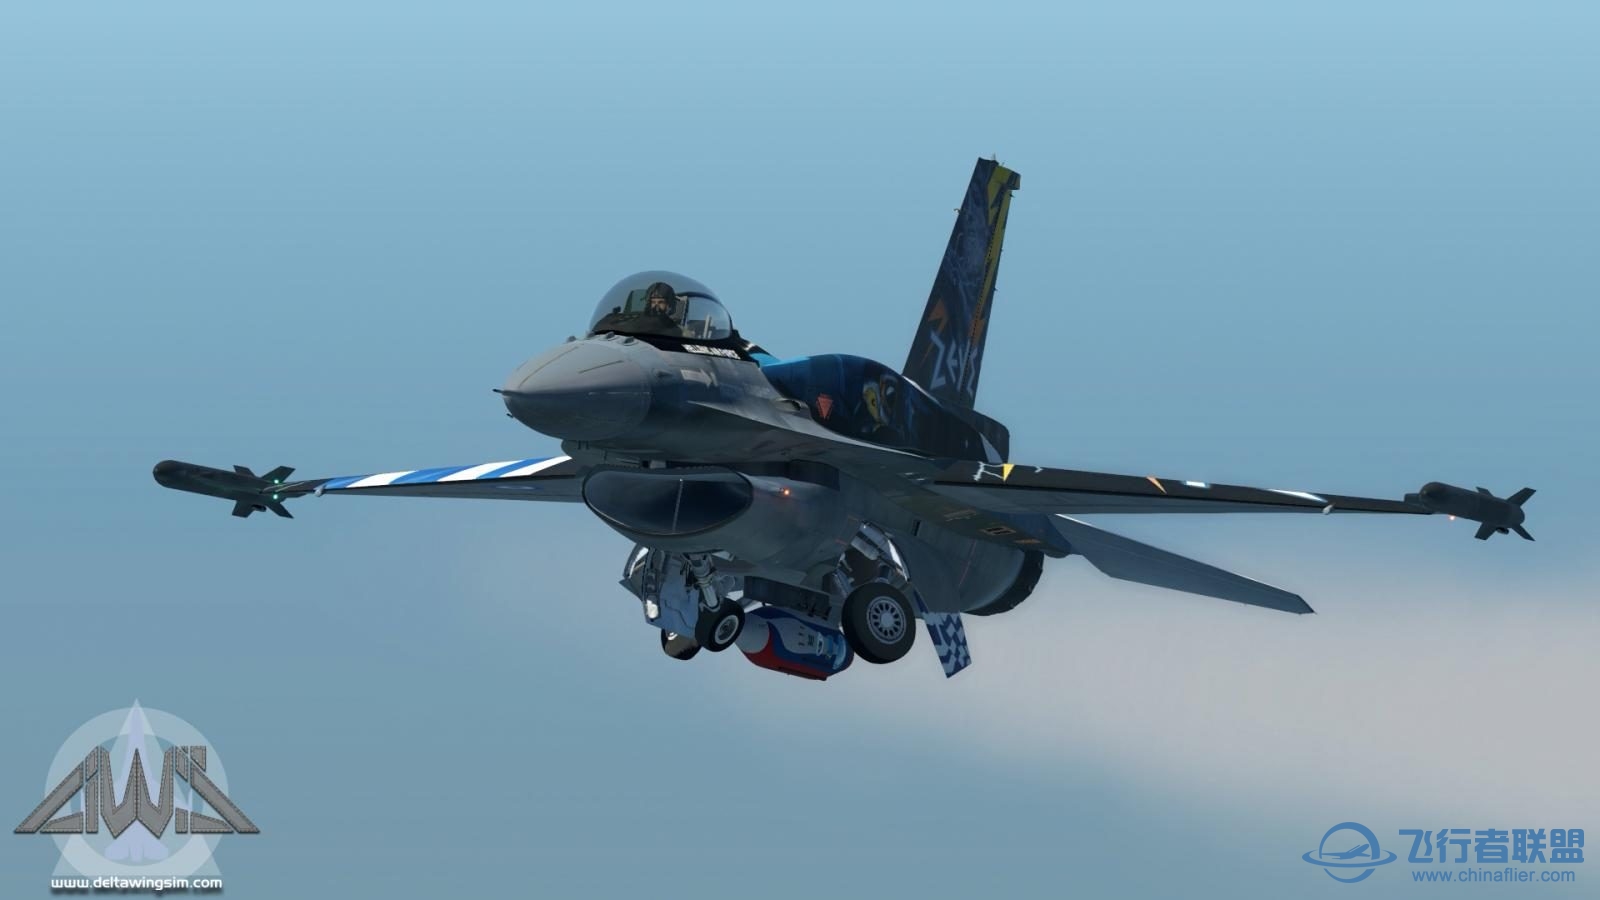 DeltaWing Simulations 发布 F-16C XPL-9898 